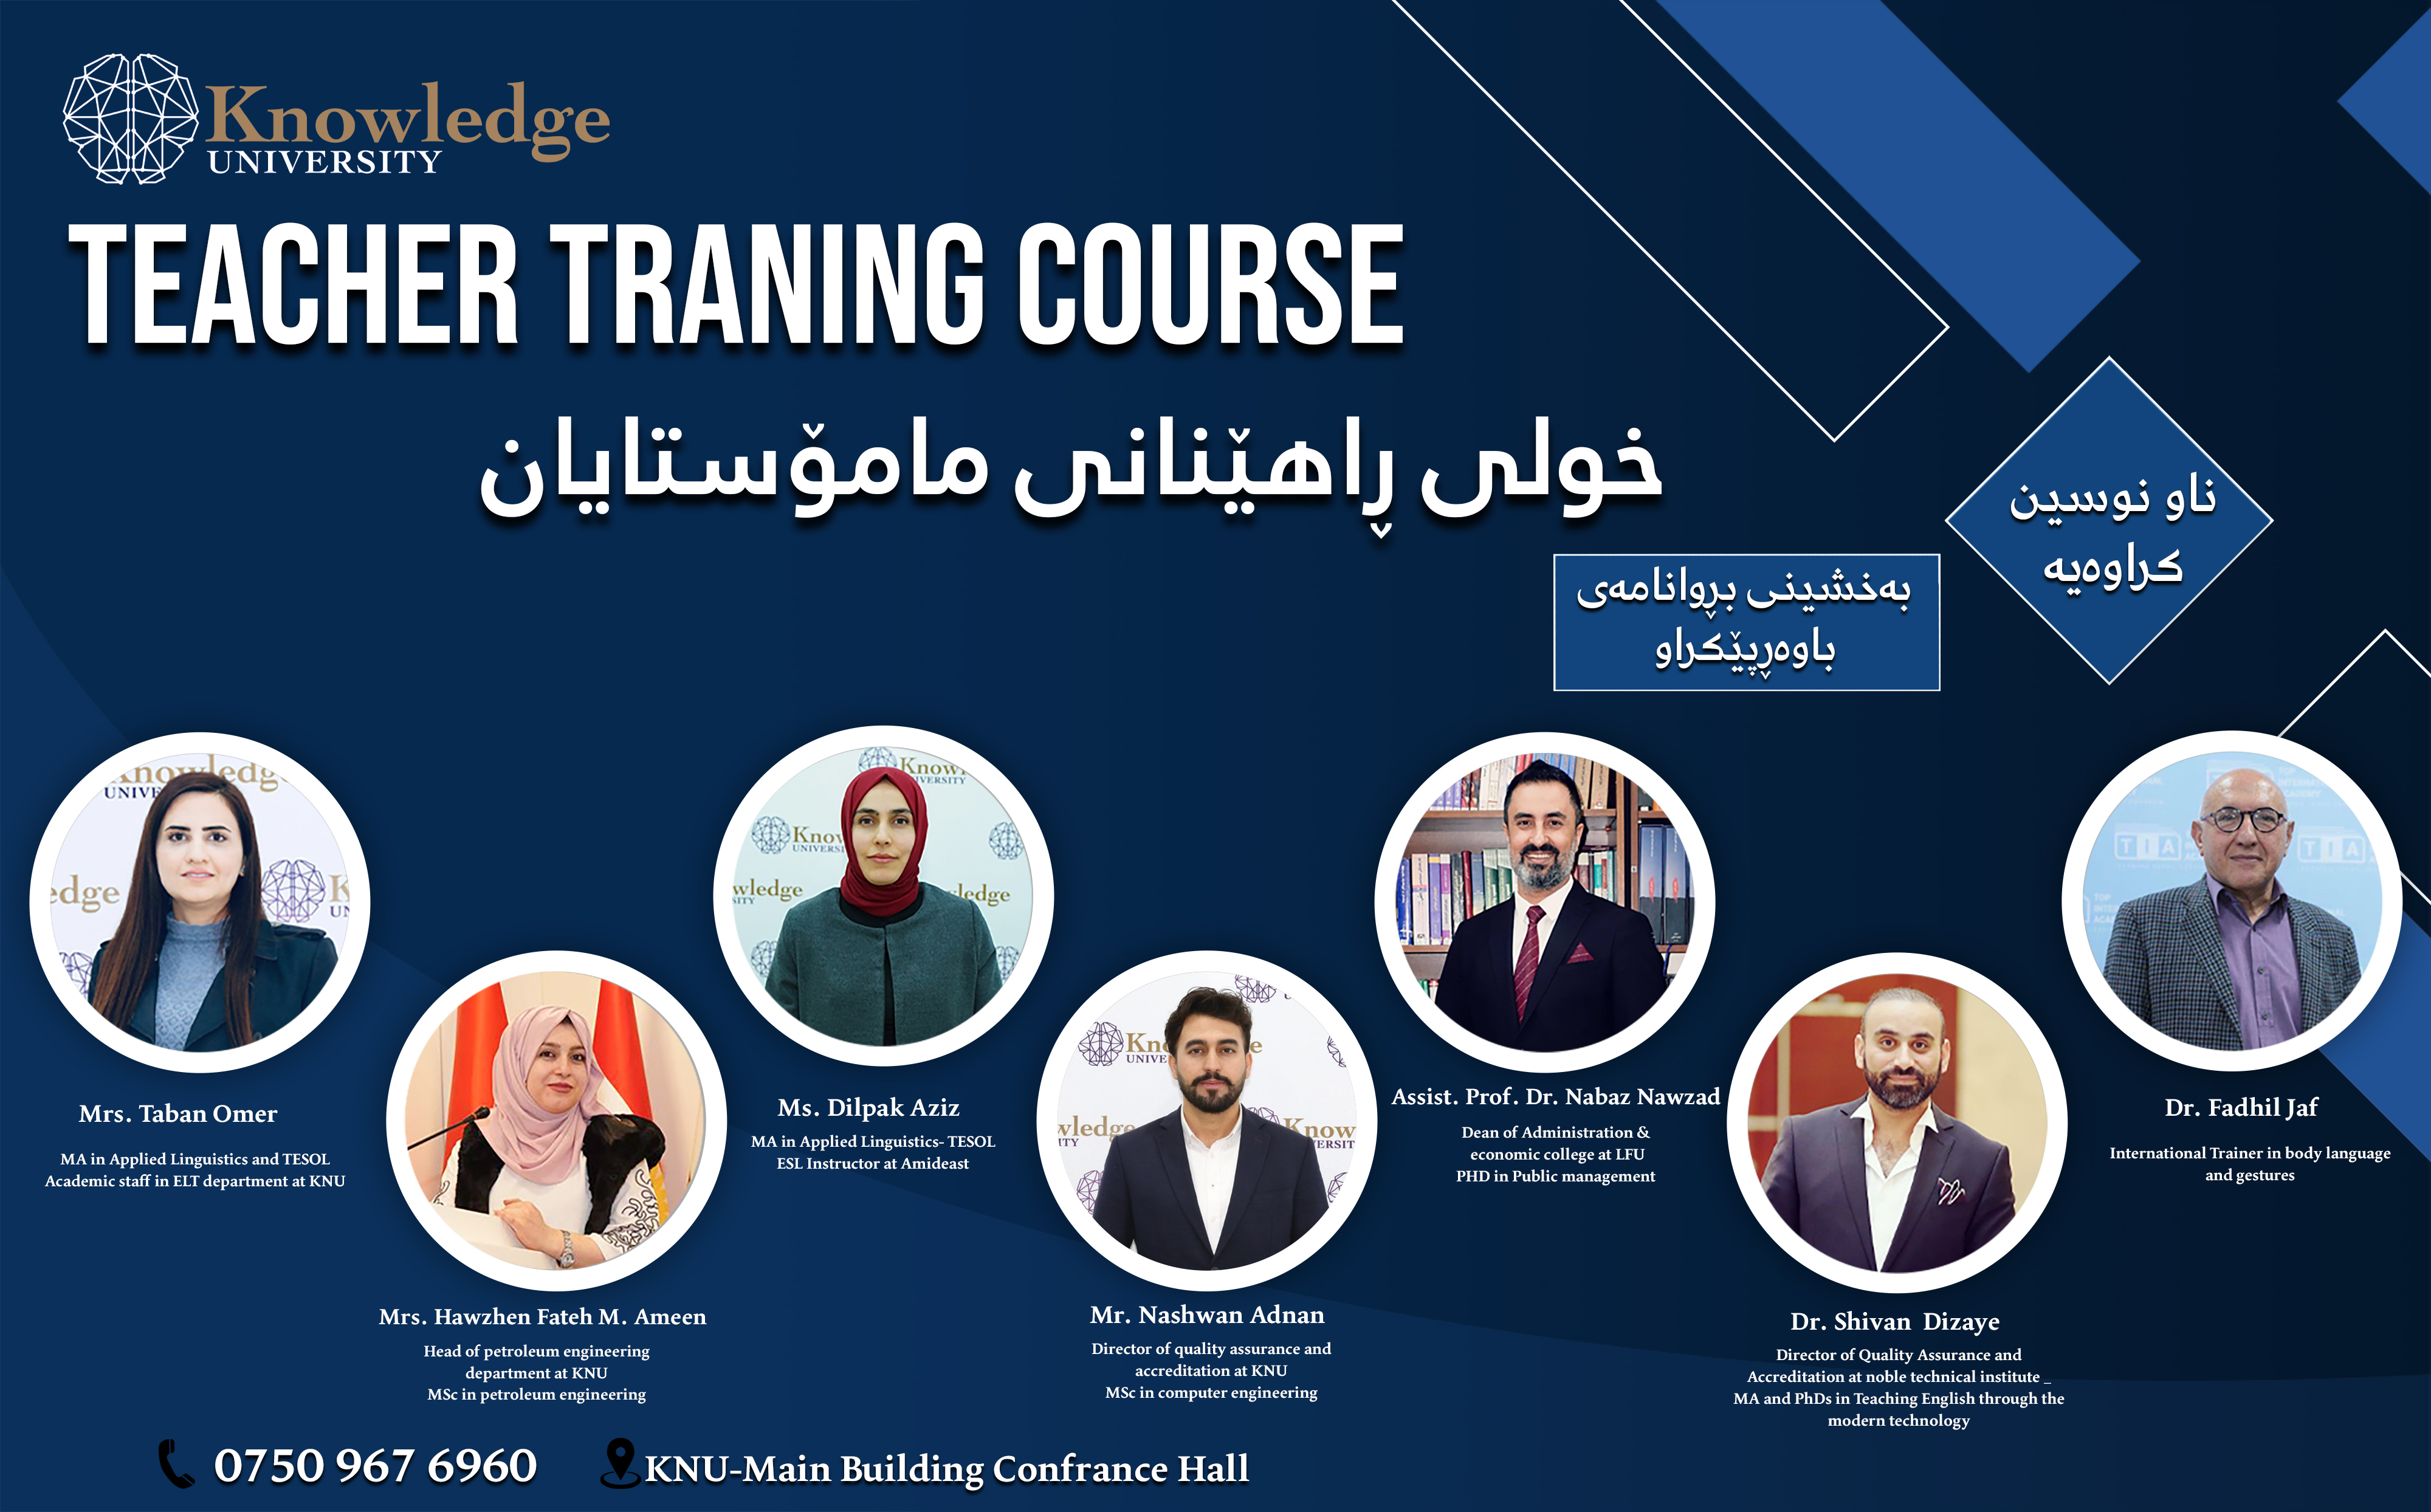 Teacher Development Course at Knowledge University: Topics and Presenters